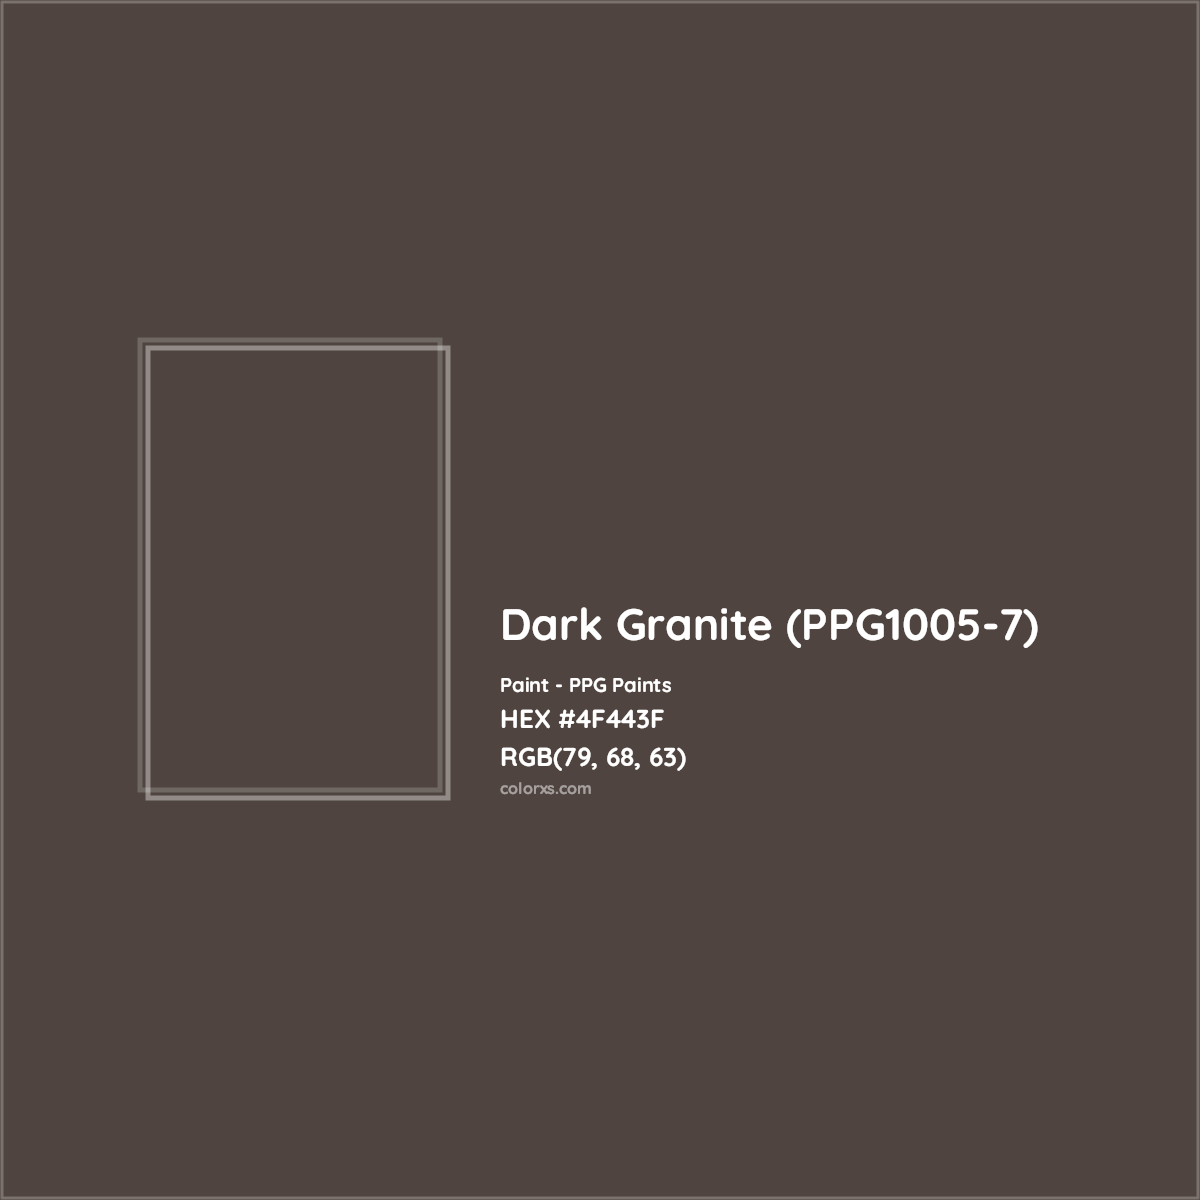 HEX #4F443F Dark Granite (PPG1005-7) Paint PPG Paints - Color Code